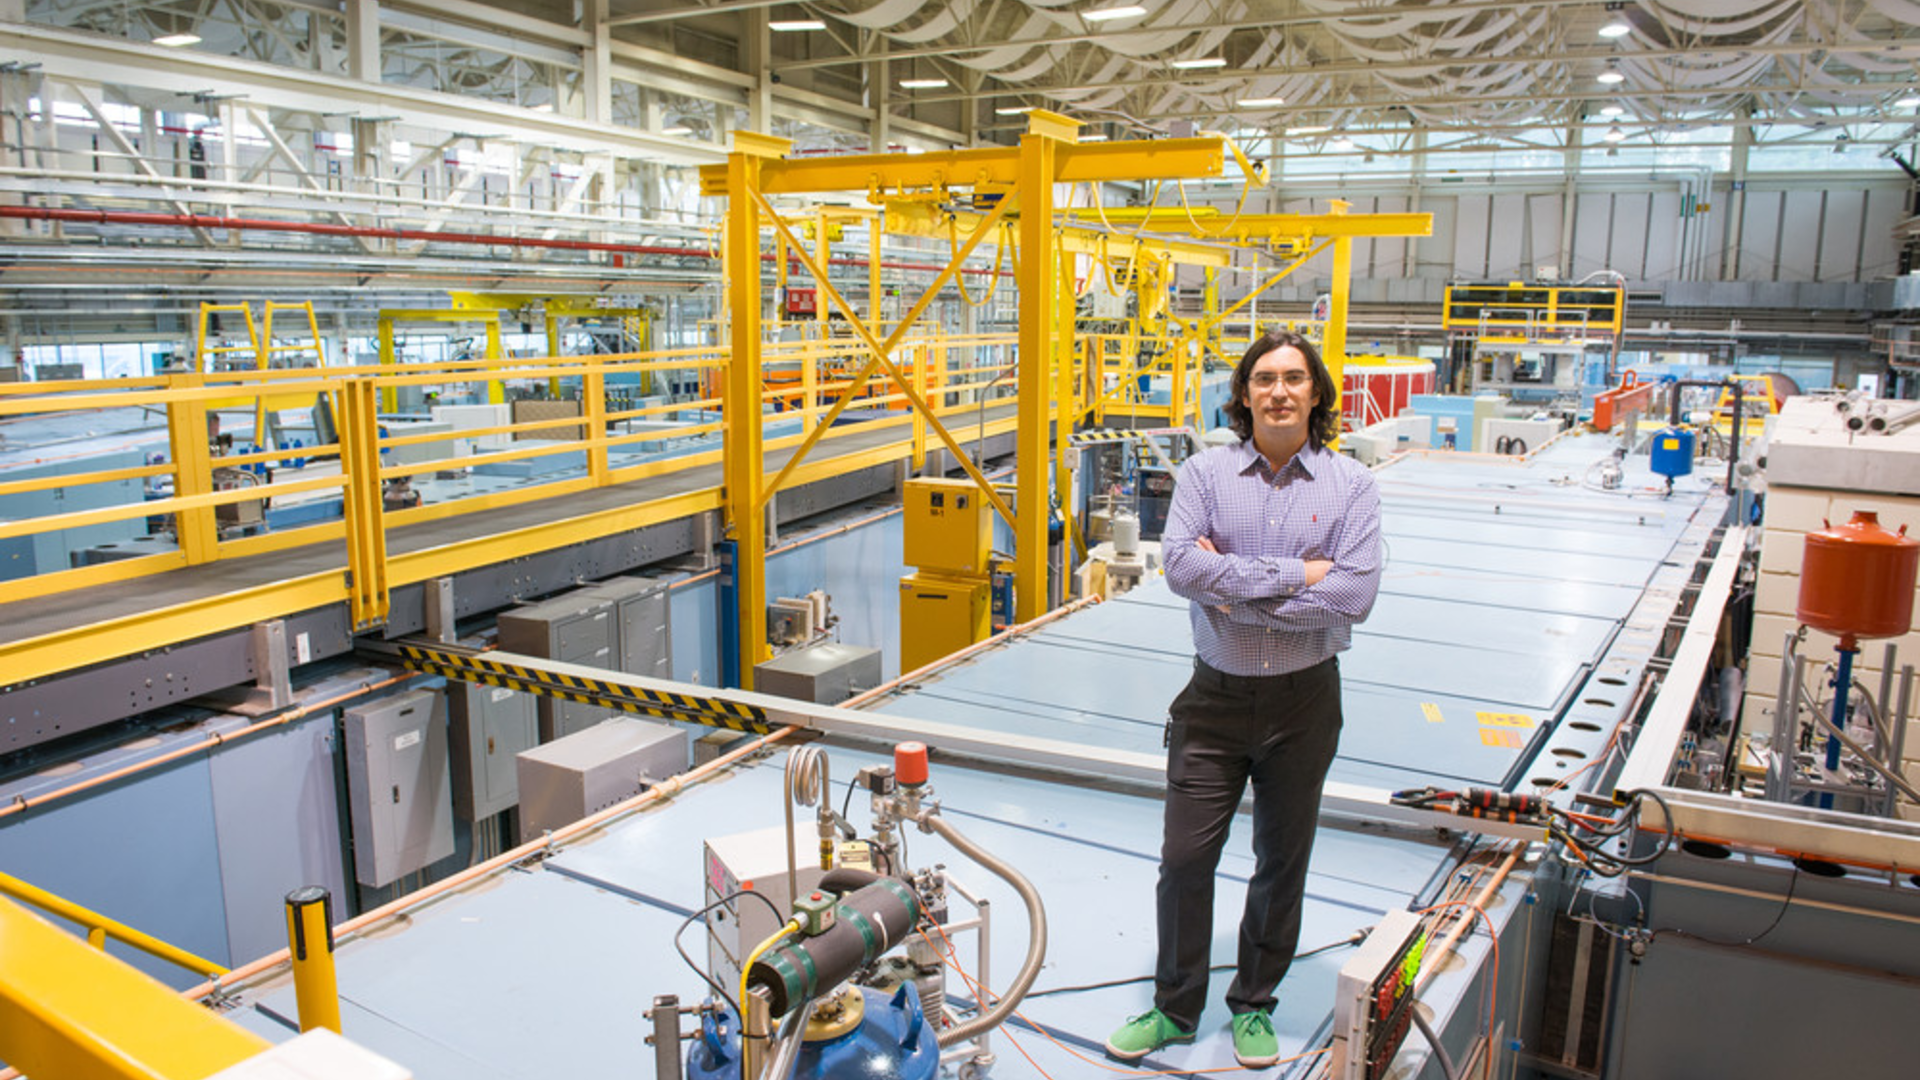 Professor Dmitry Pushin standing in an industrial looking lab space